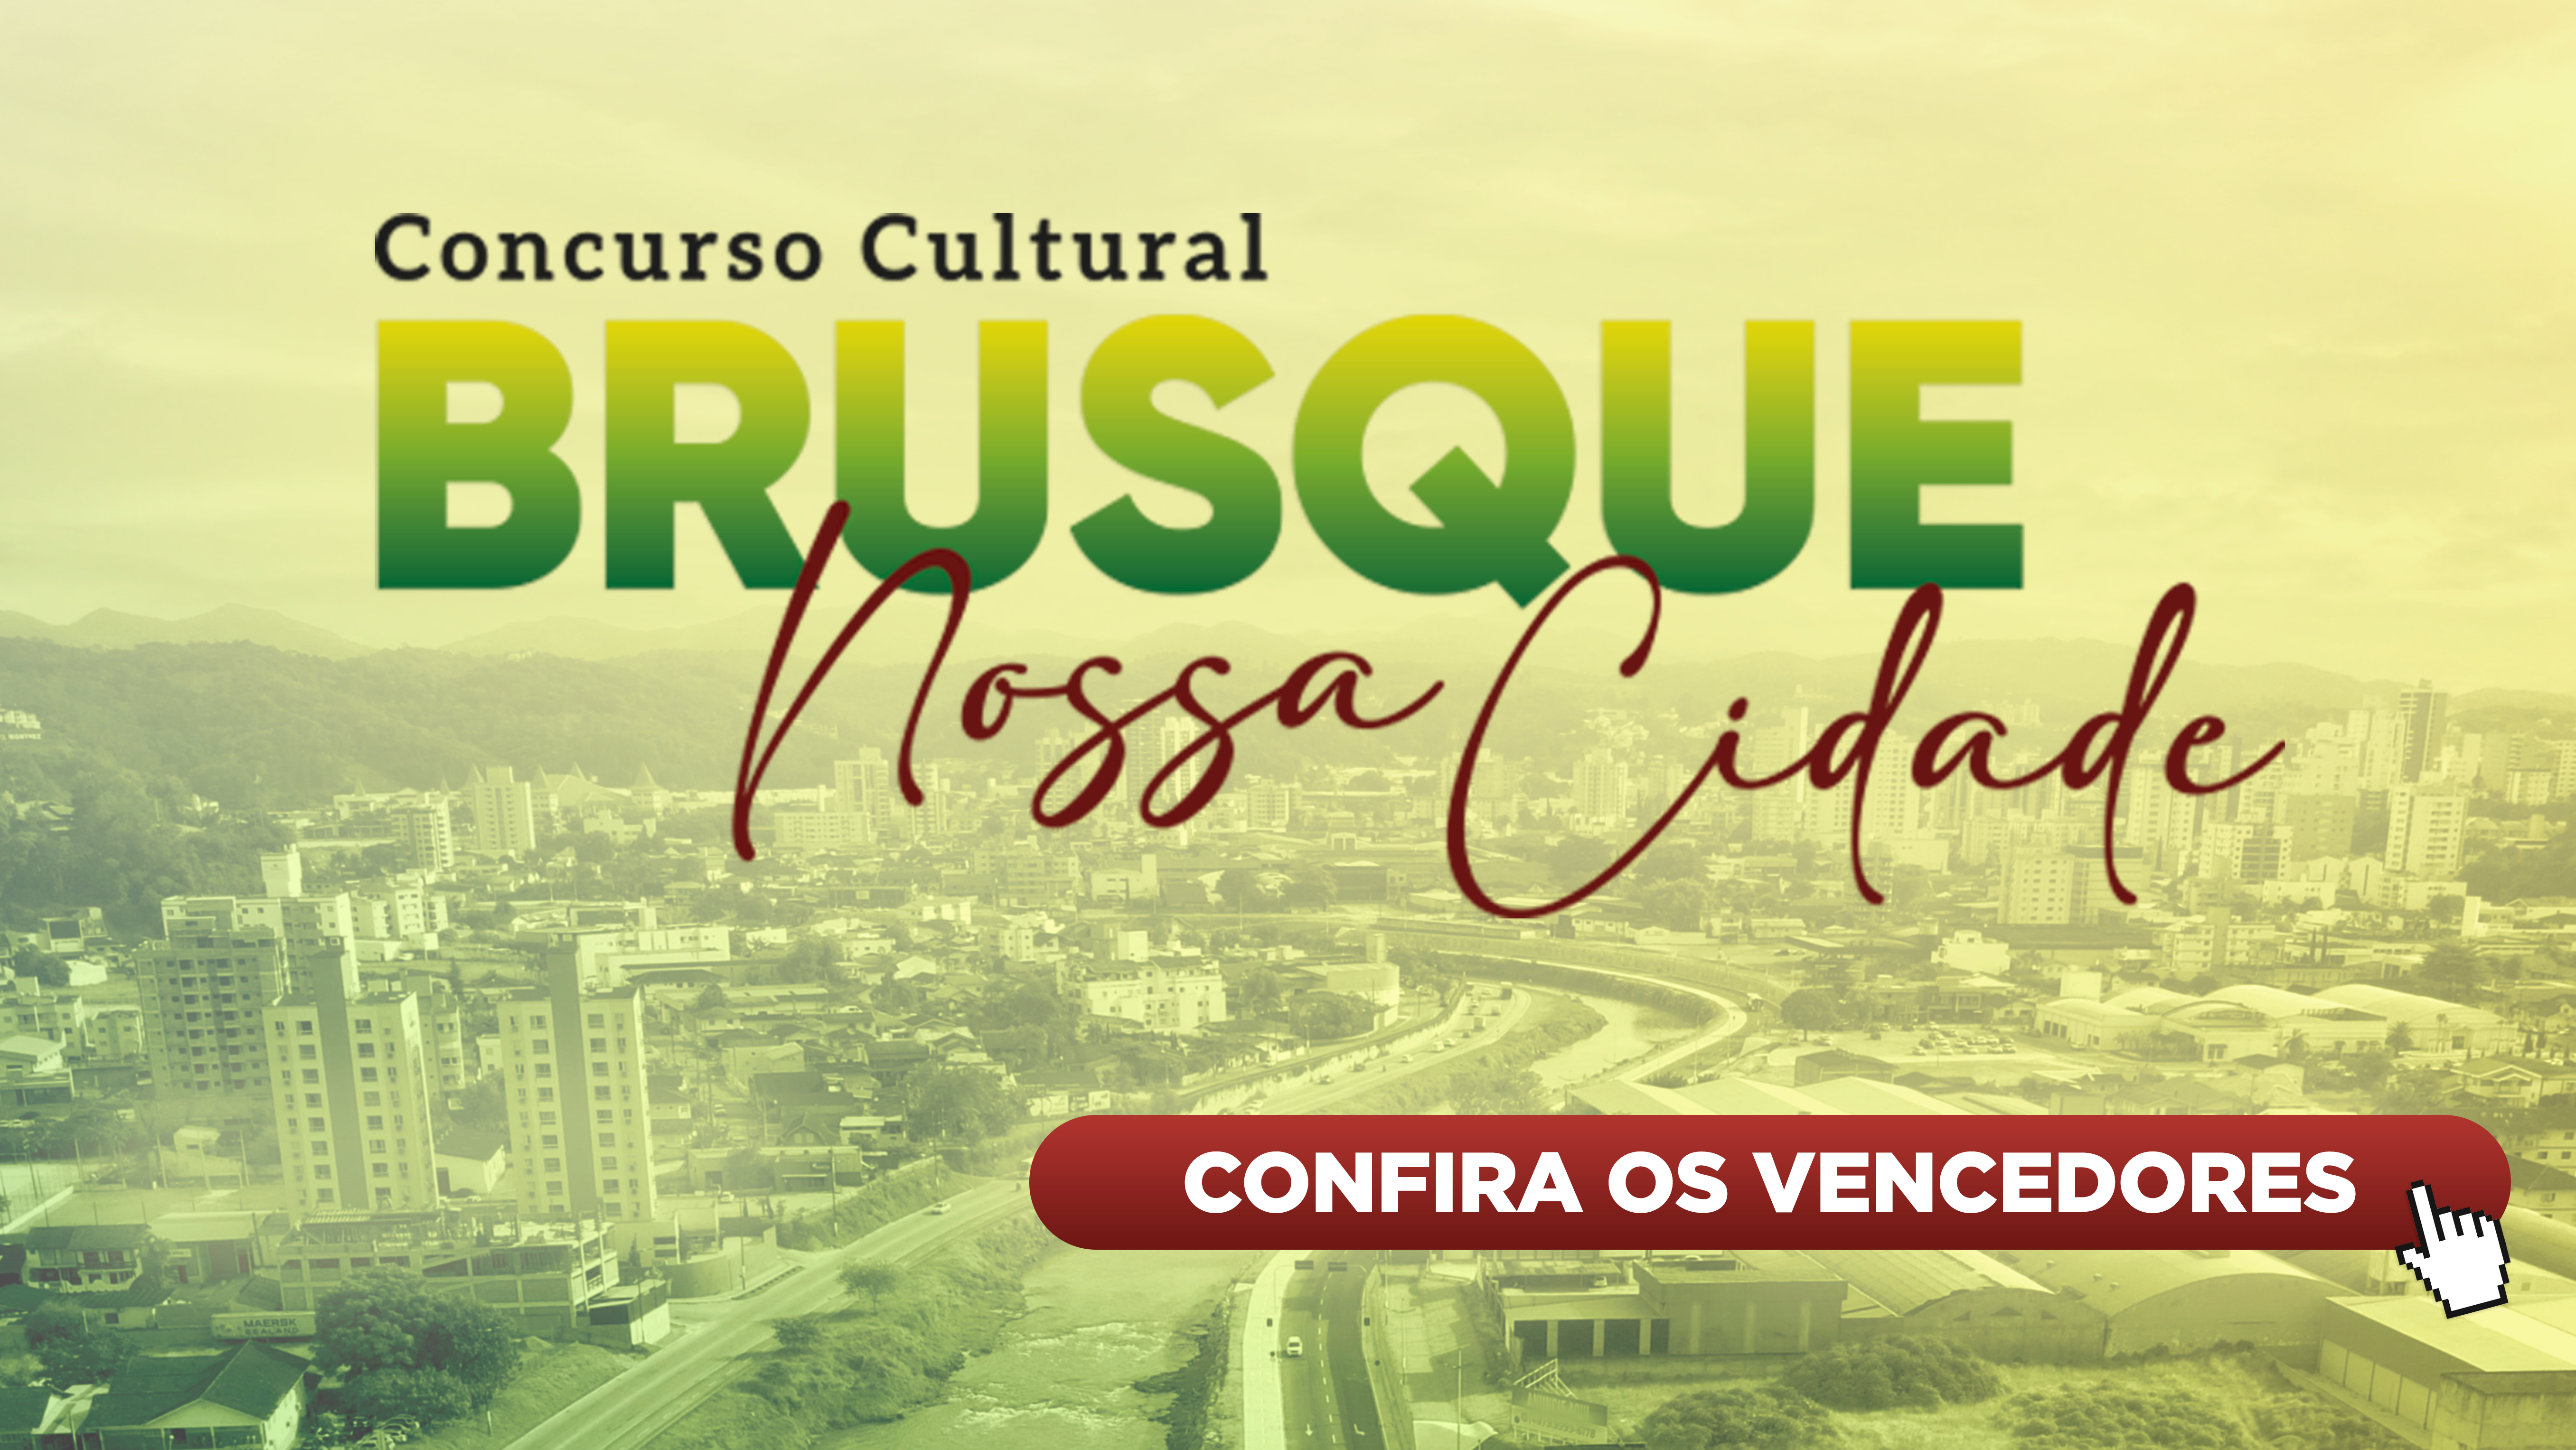 MOBILE - Concurso Cultural Brusque Nossa Cidade